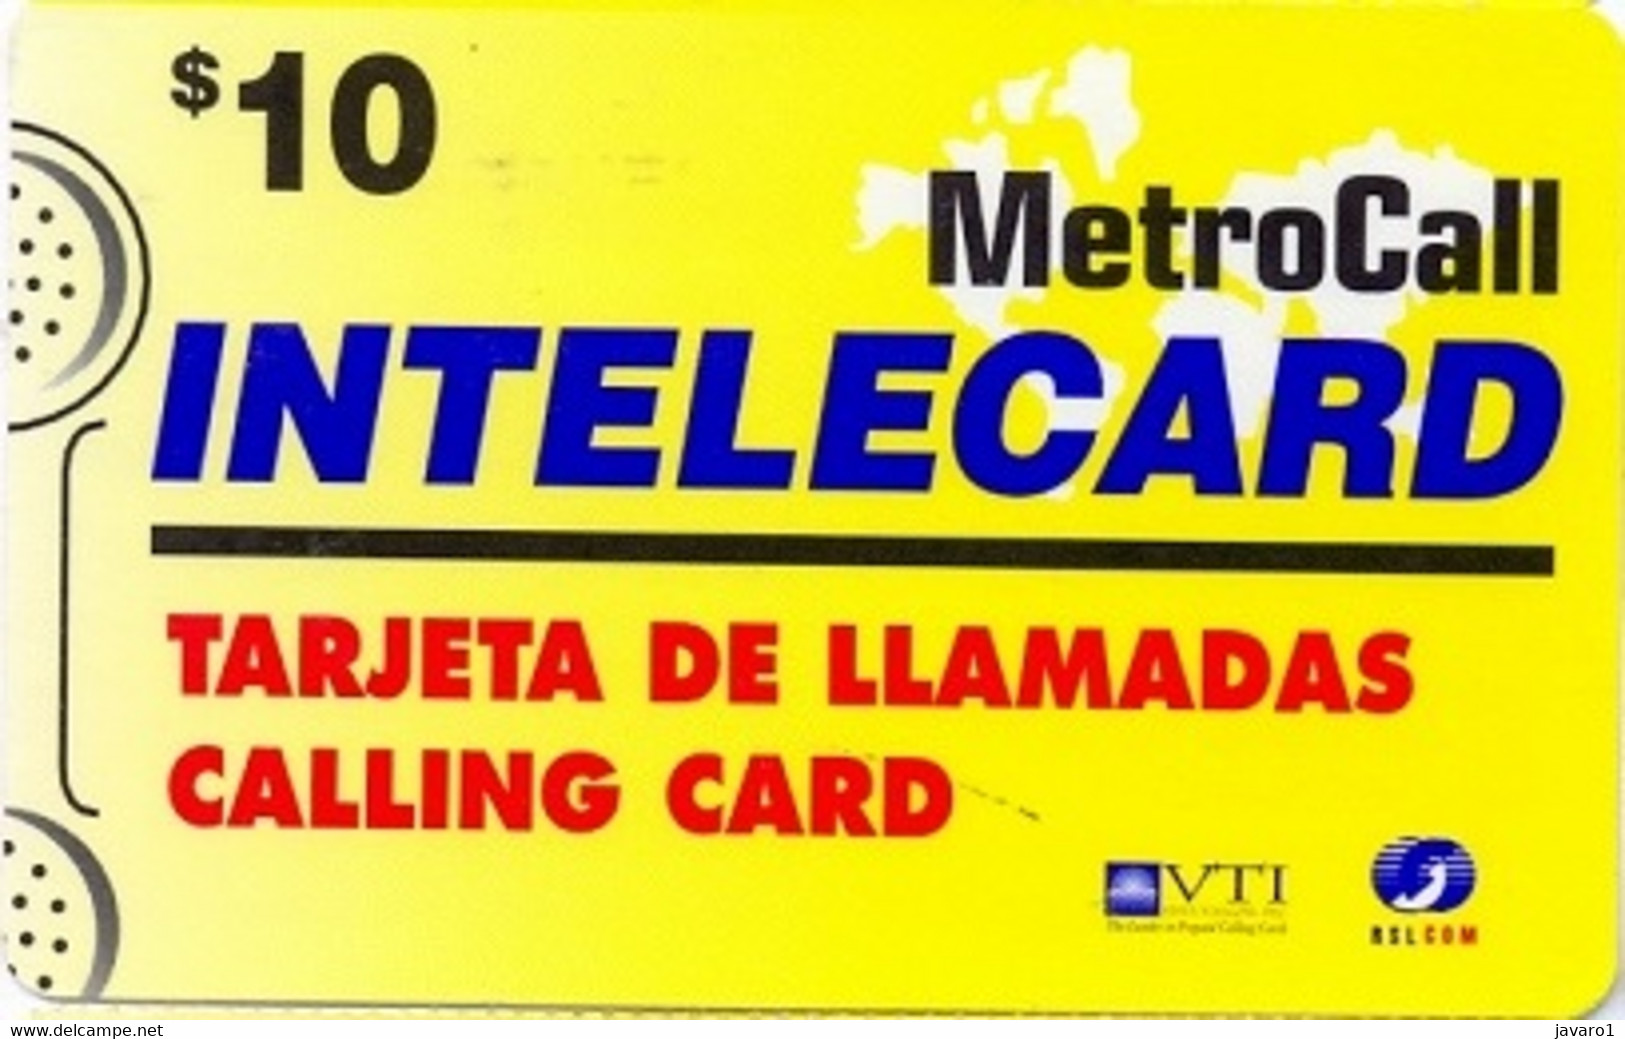 CODETEL-ITC : STD05 $10 INTELECARD Yellow Metrocall VTI+Rslcom USED Exp: 12 MONTHS - Dominicana